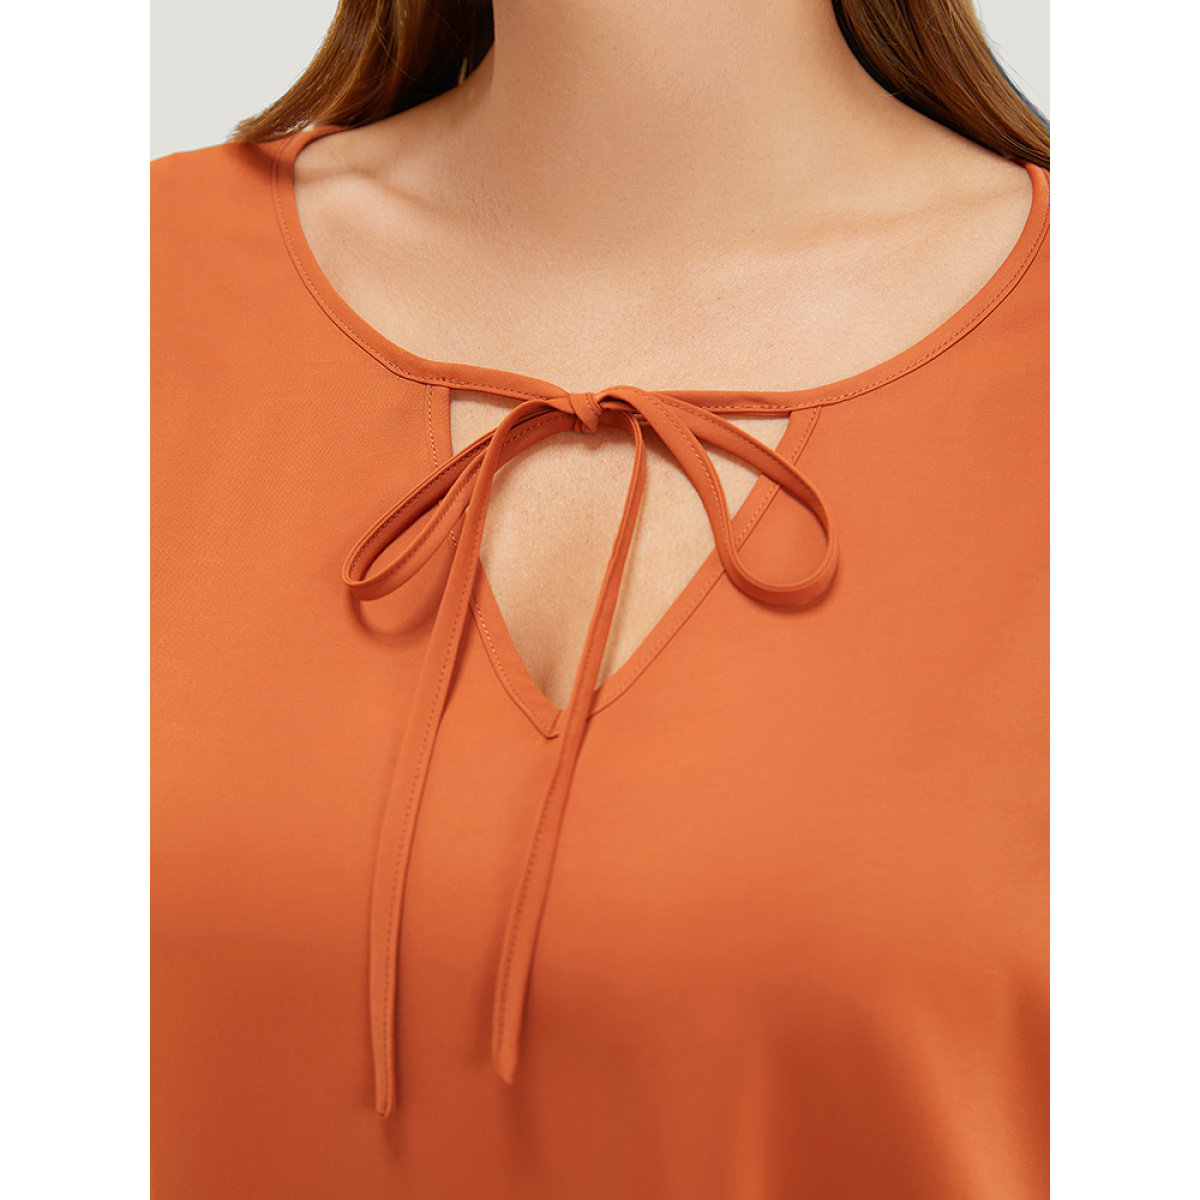 

Plus Size Rust Solid Layered Sleeve Keyhole Tie Neck Contrast Trim Blouse Women Elegant Short sleeve Tie Neck Dailywear Blouses BloomChic